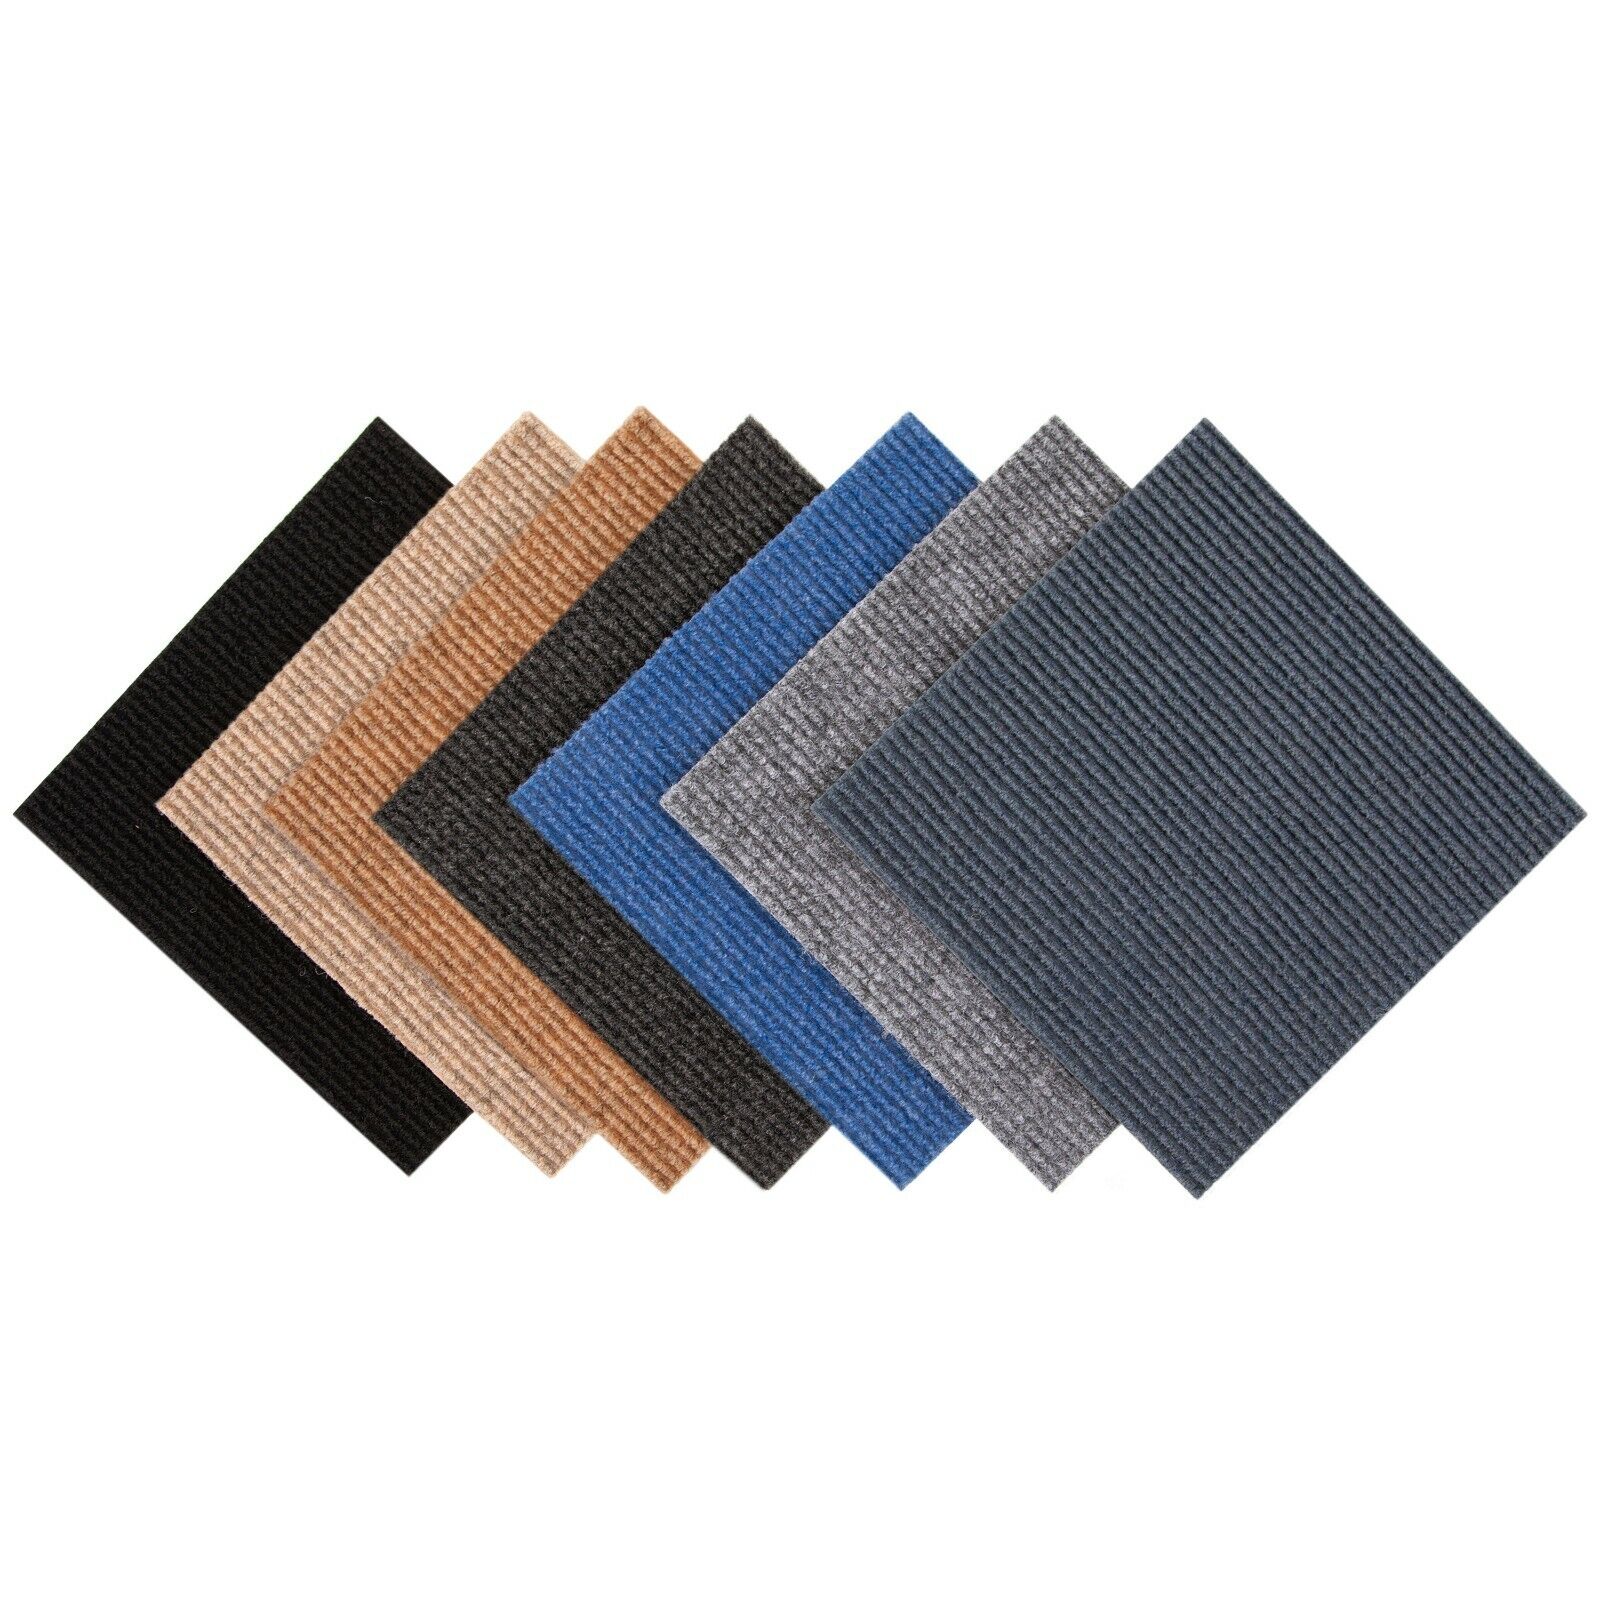 FlooringInc Berber Peel & Stick Carpet Tiles, 12"x12", 4 Pack Sizes Berber BerberCarpet